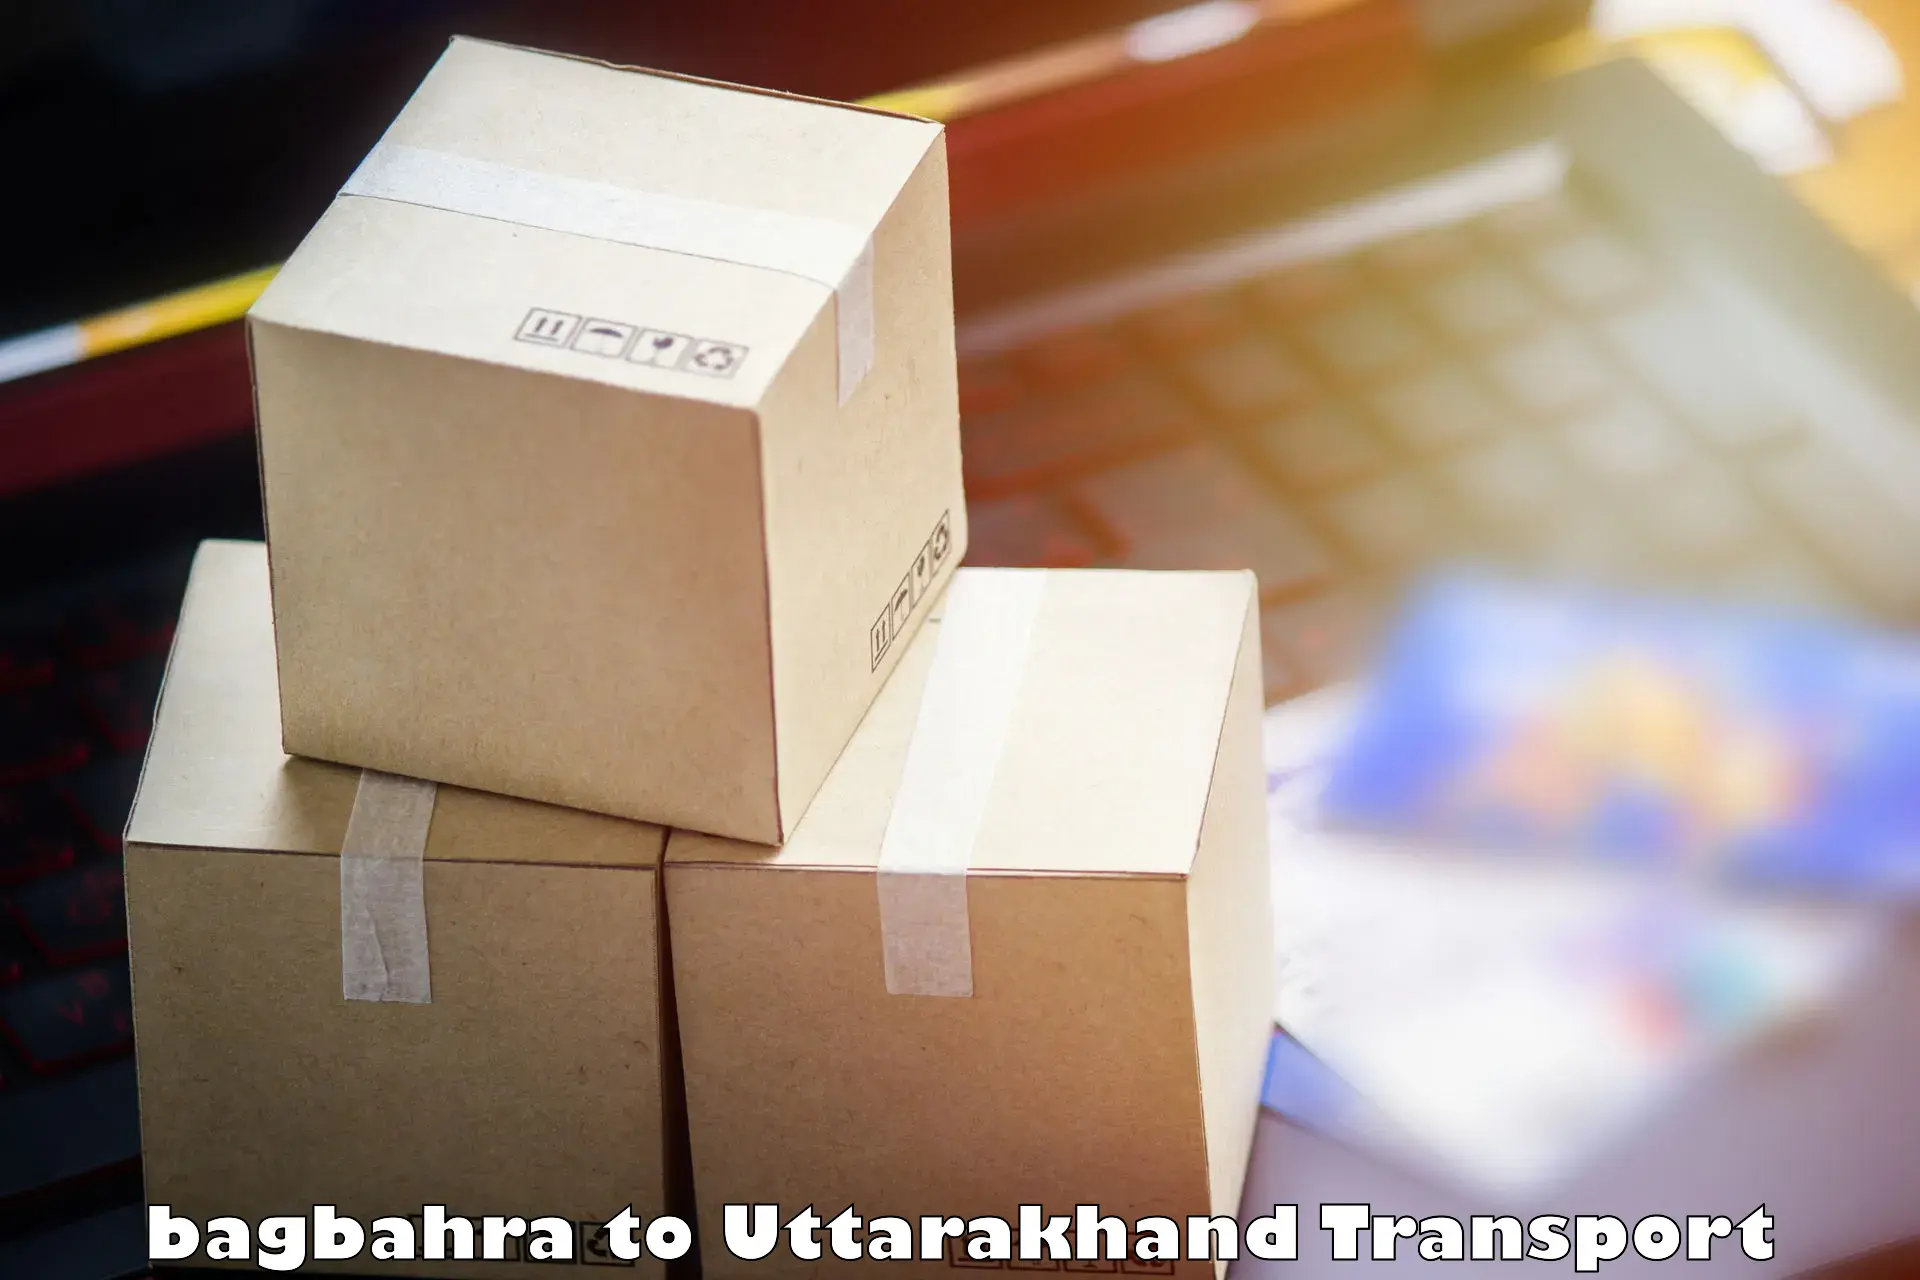 Online transport service bagbahra to Dehradun